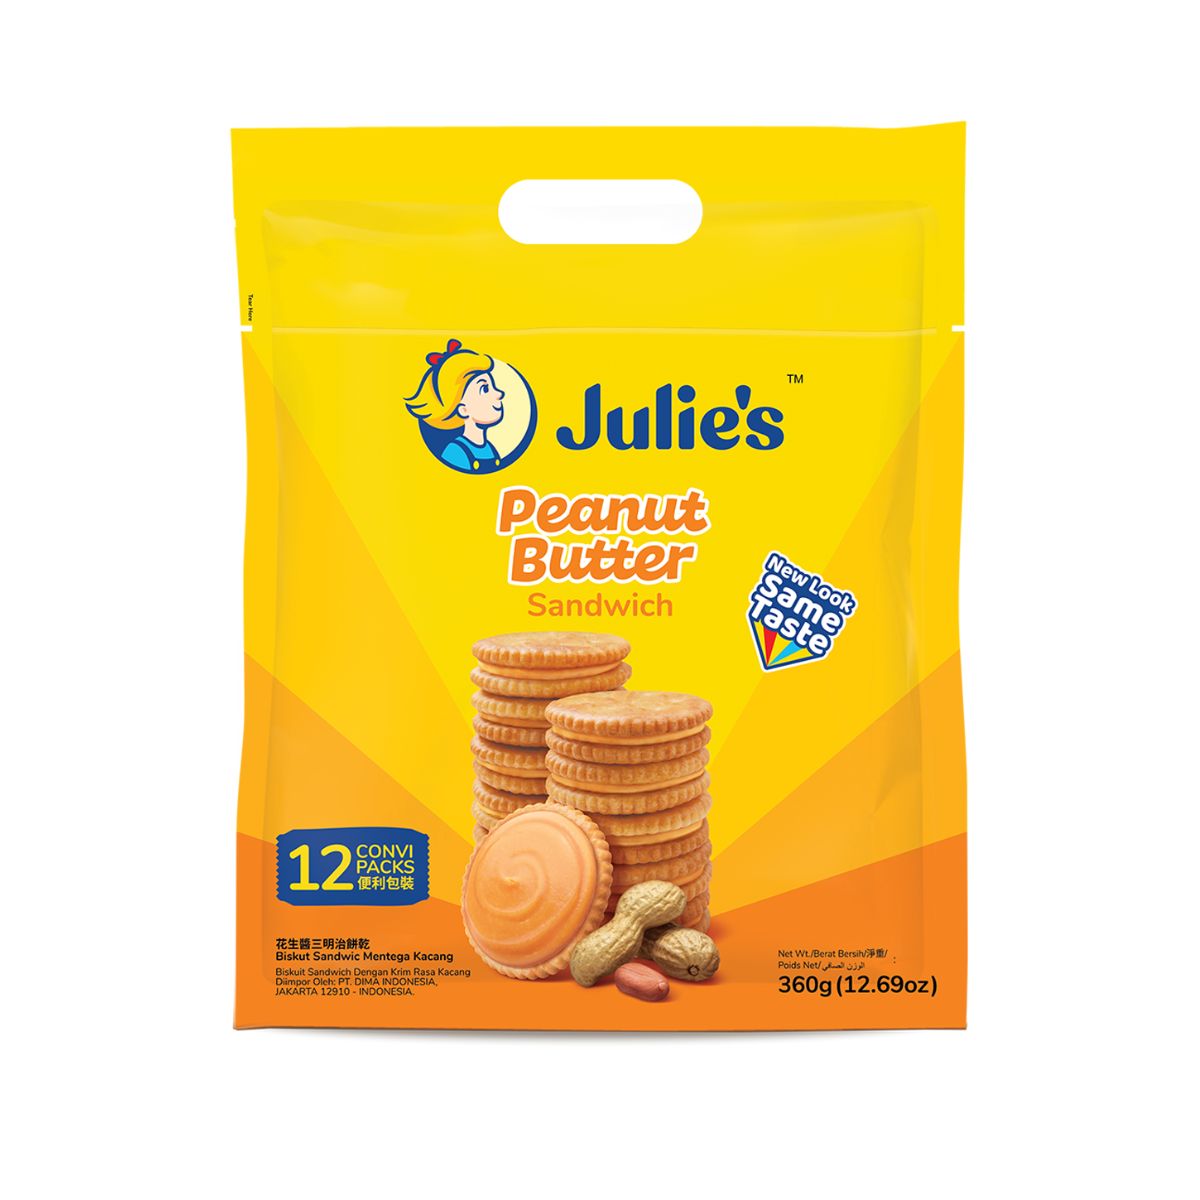 Julie's Peanut Butter Sandwich - 12 Convi Packs - 360g